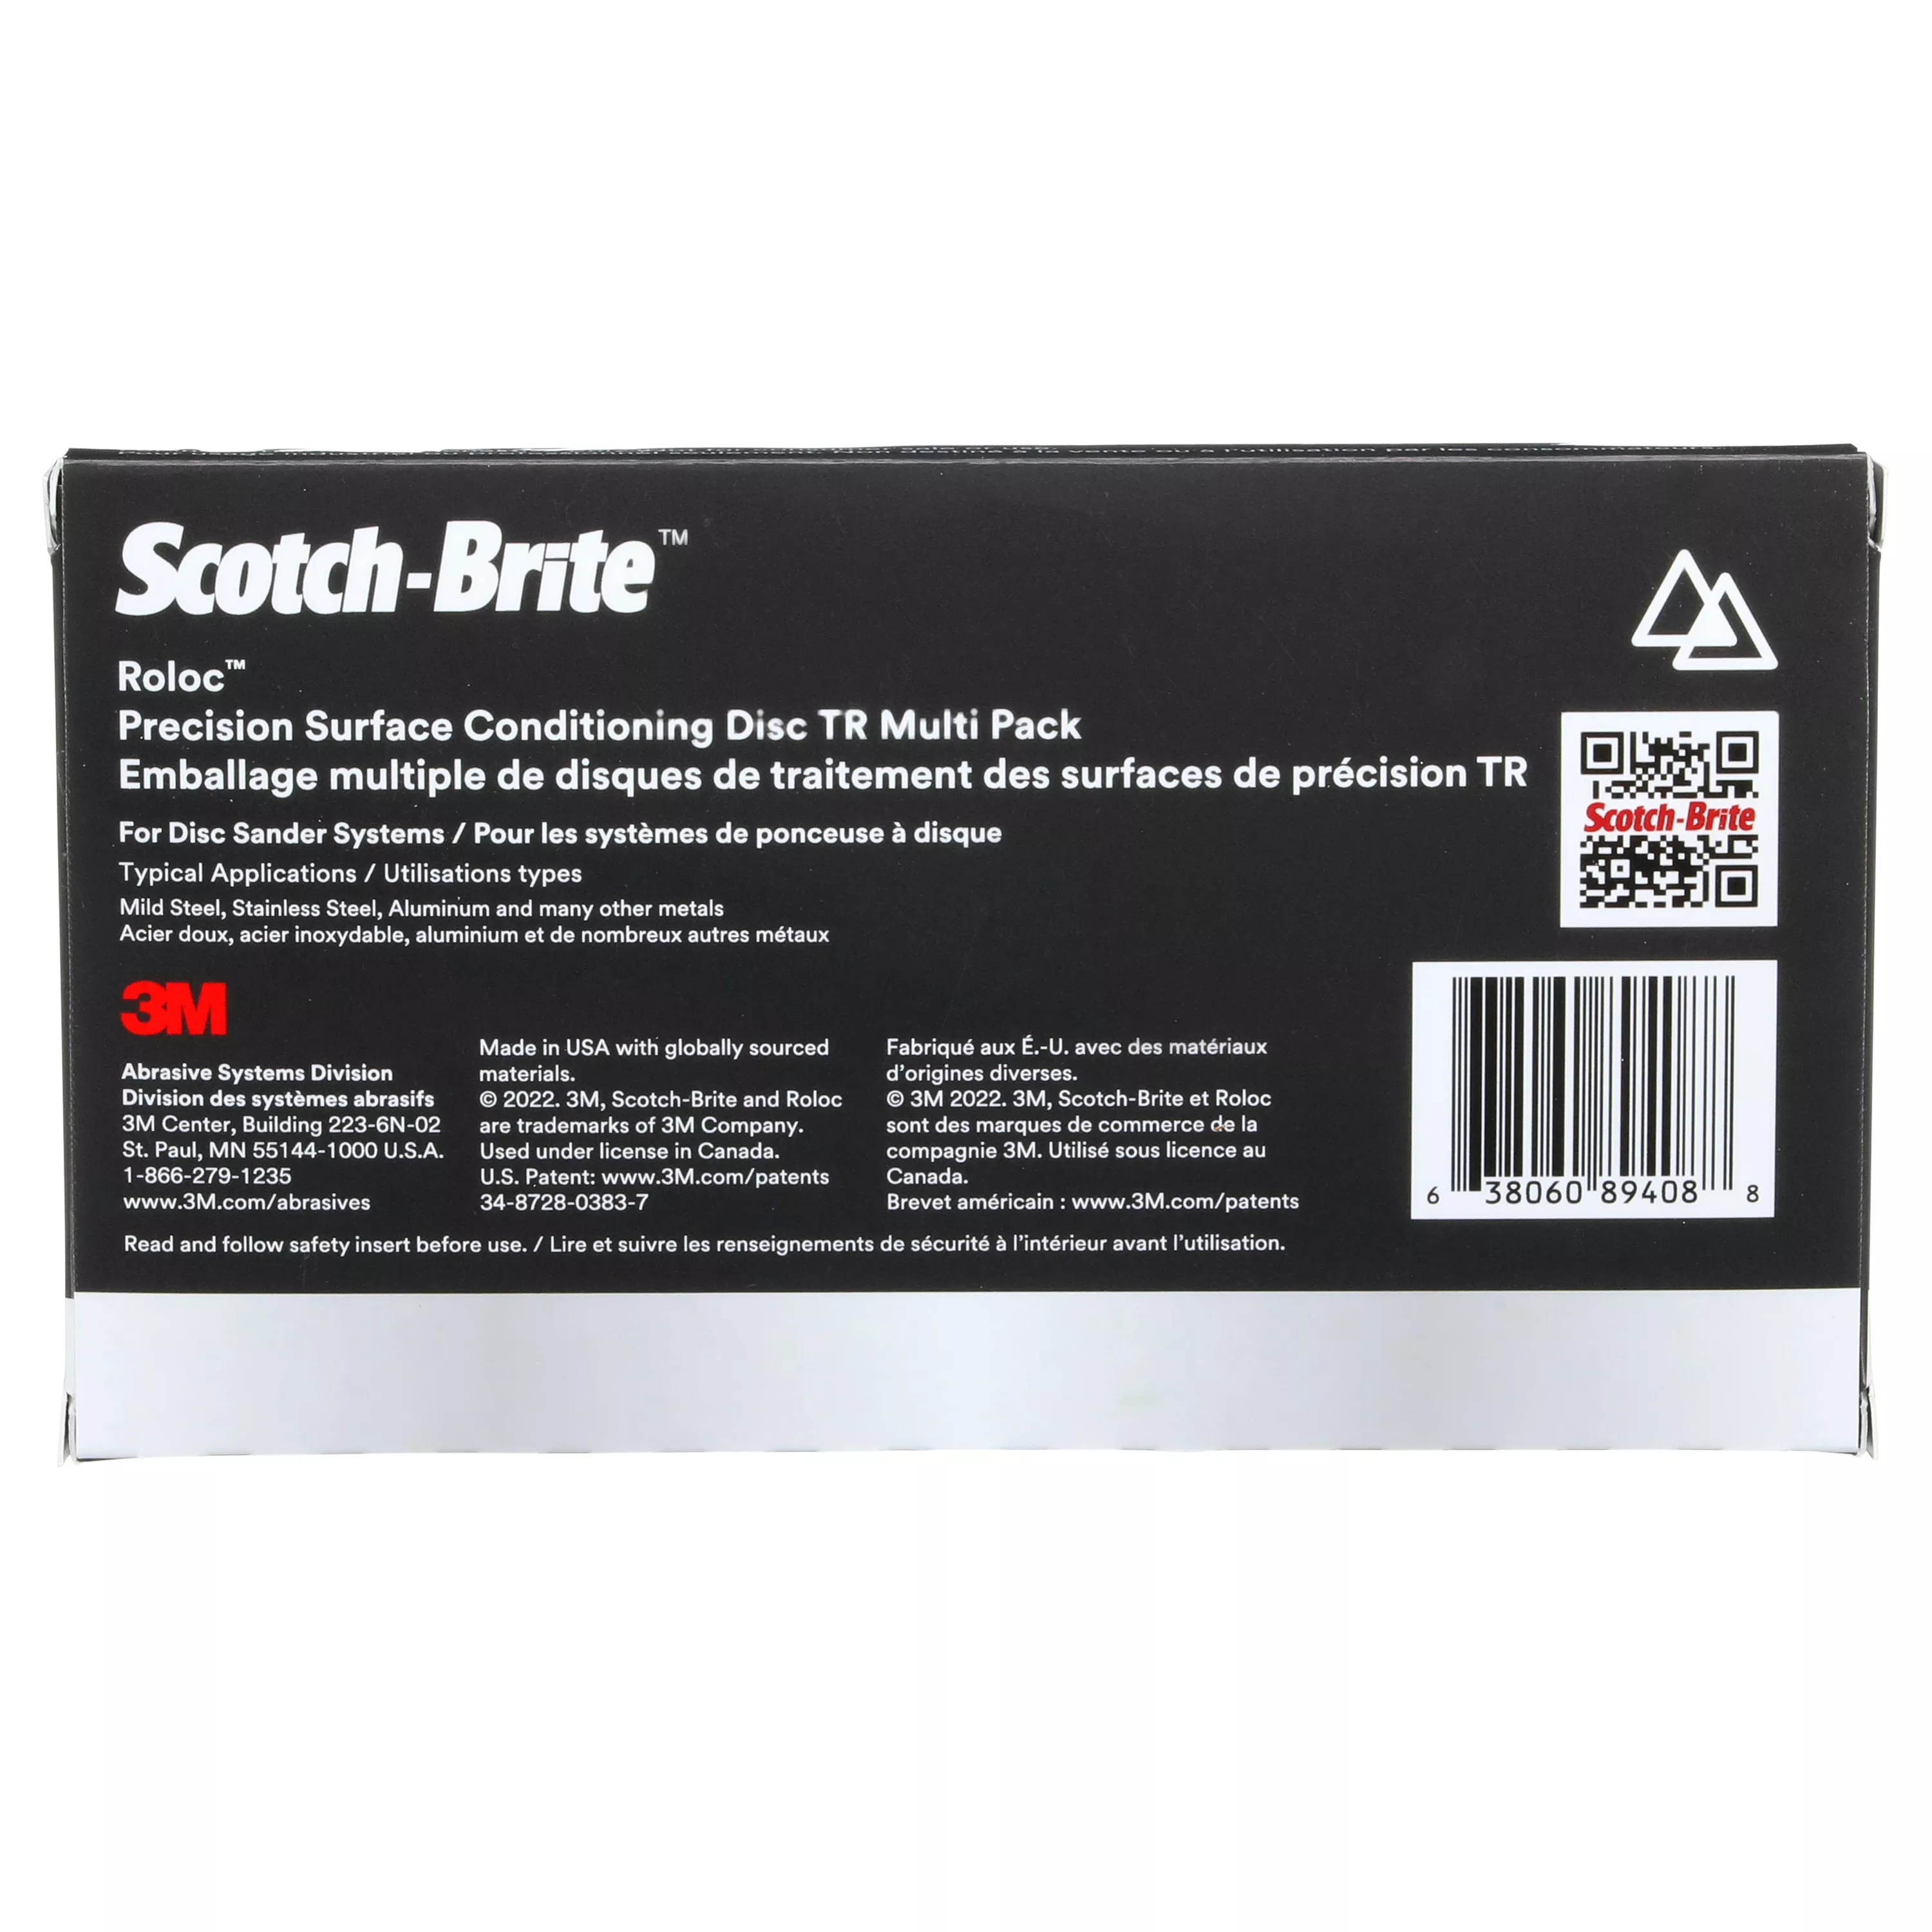 SKU 7100278240 | Scotch-Brite™ Roloc™ Precision Surface Conditioning Disc